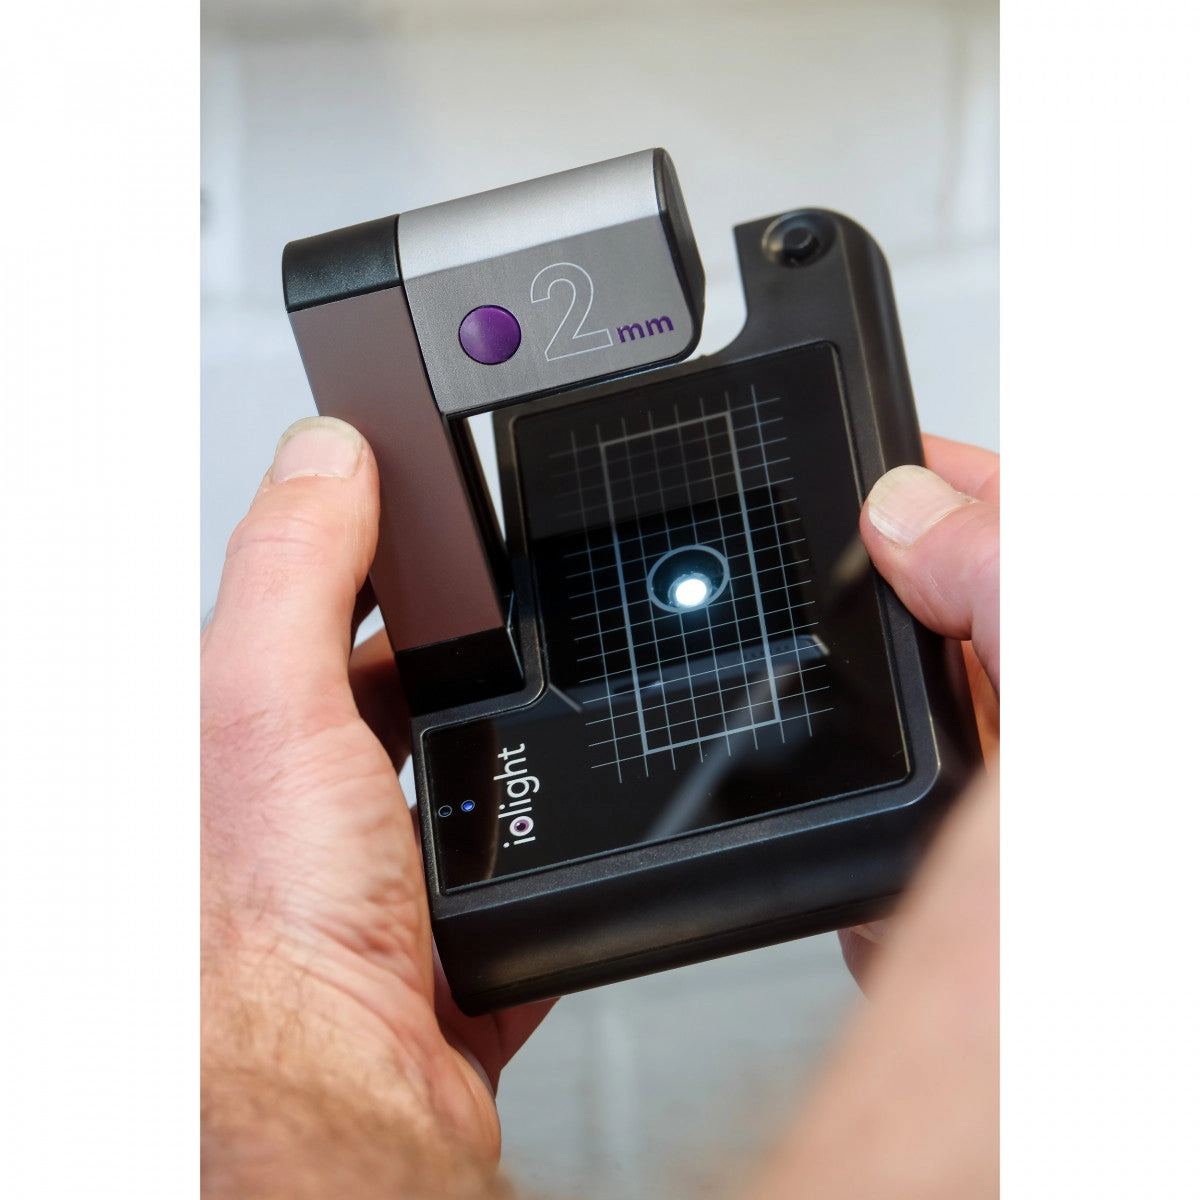 ioLight 2mm Portable Digital Microscope